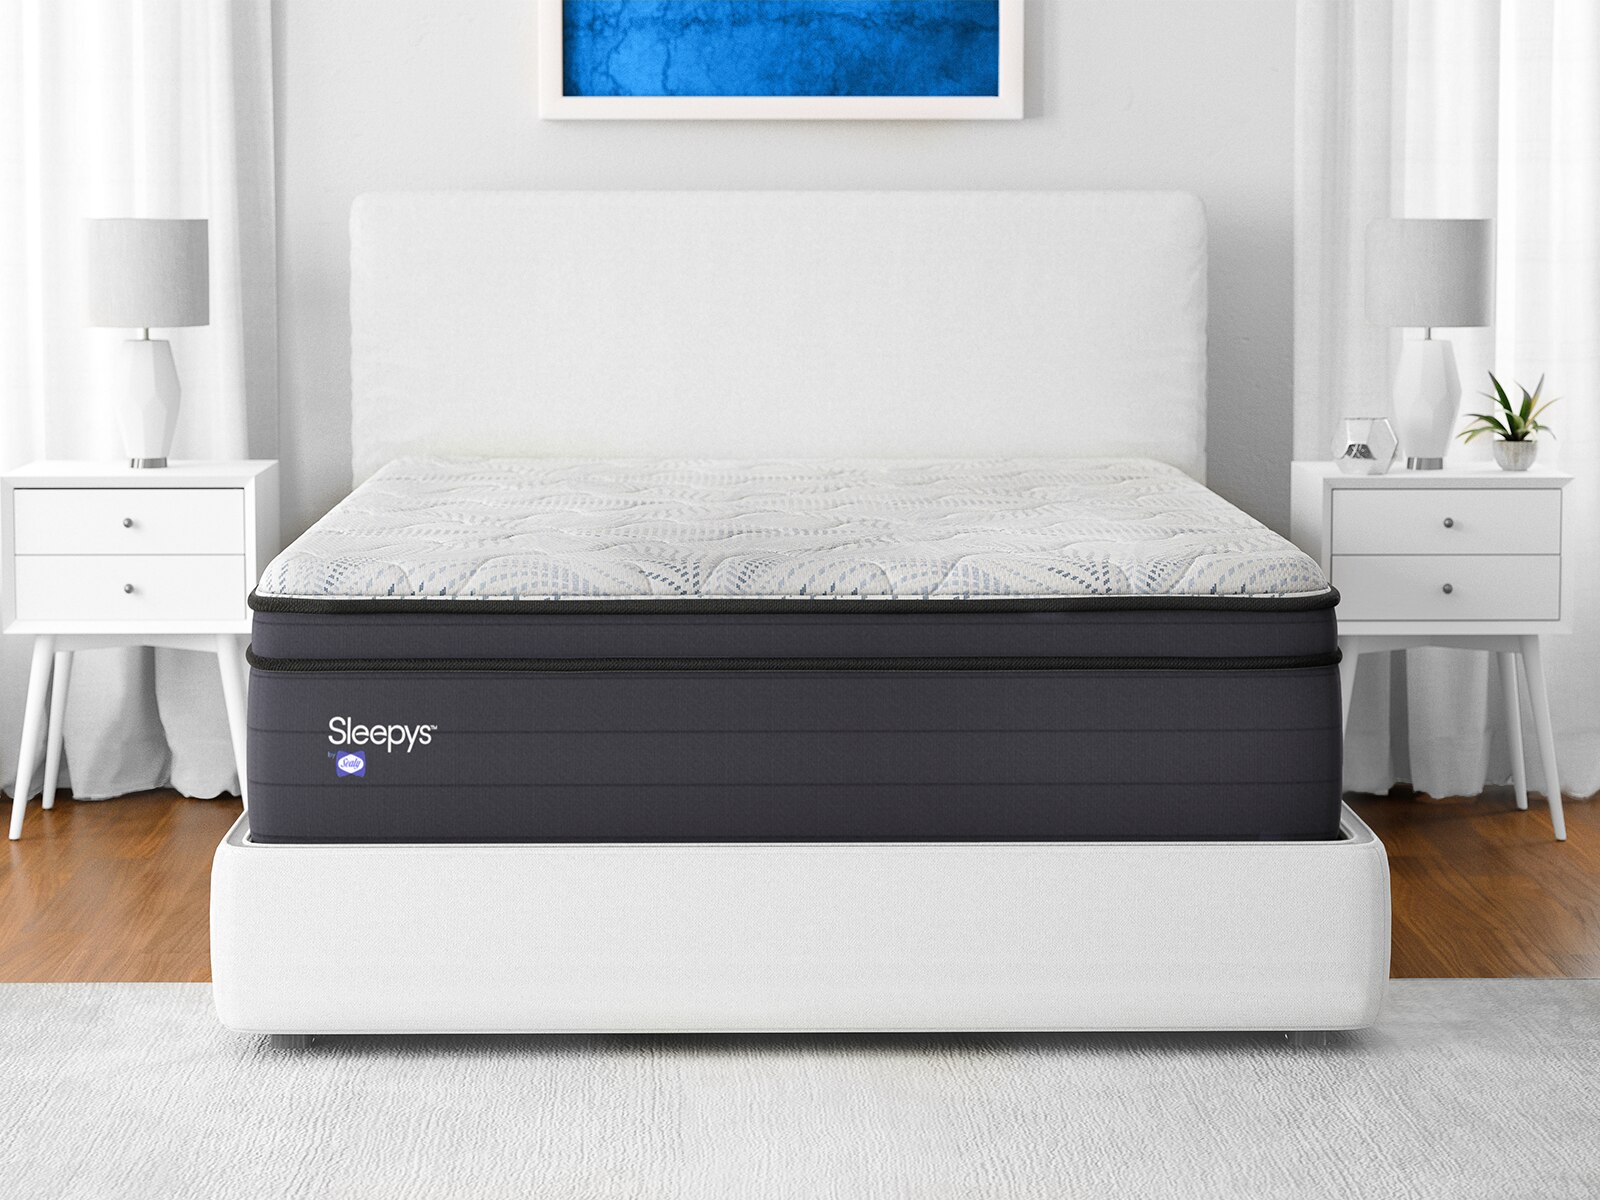 sleepys rest firm mattress twin prime